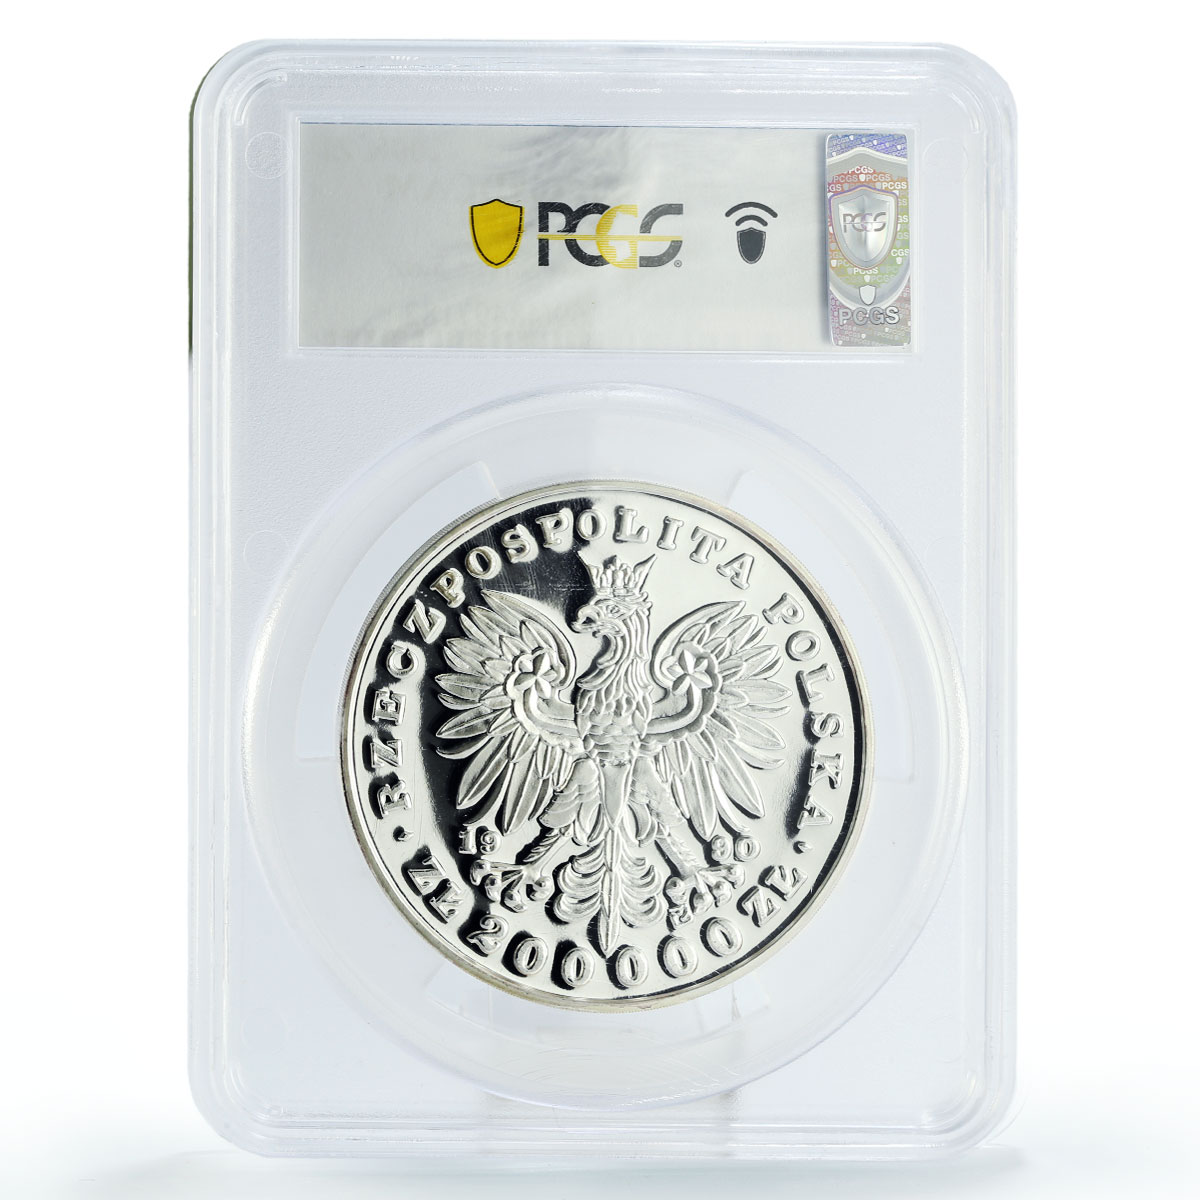 Poland 200000 zlotych Tadeusz Kosciuszko Horseman PR69 PCGS silver coin 1990